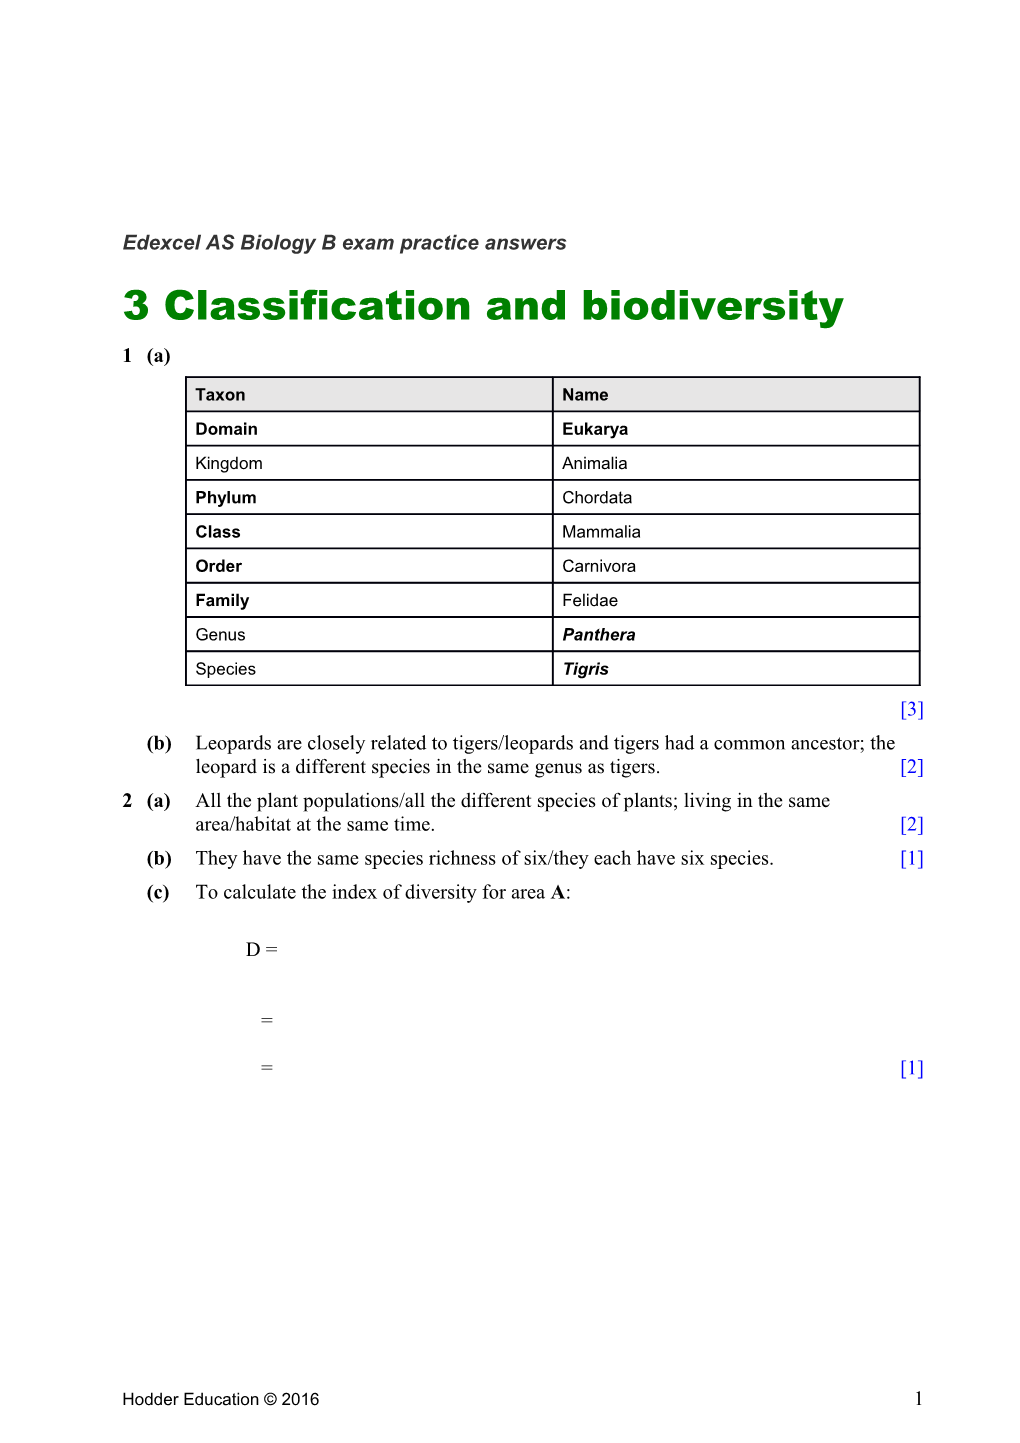 Edexcel AS Biology B Exam Practice Answers